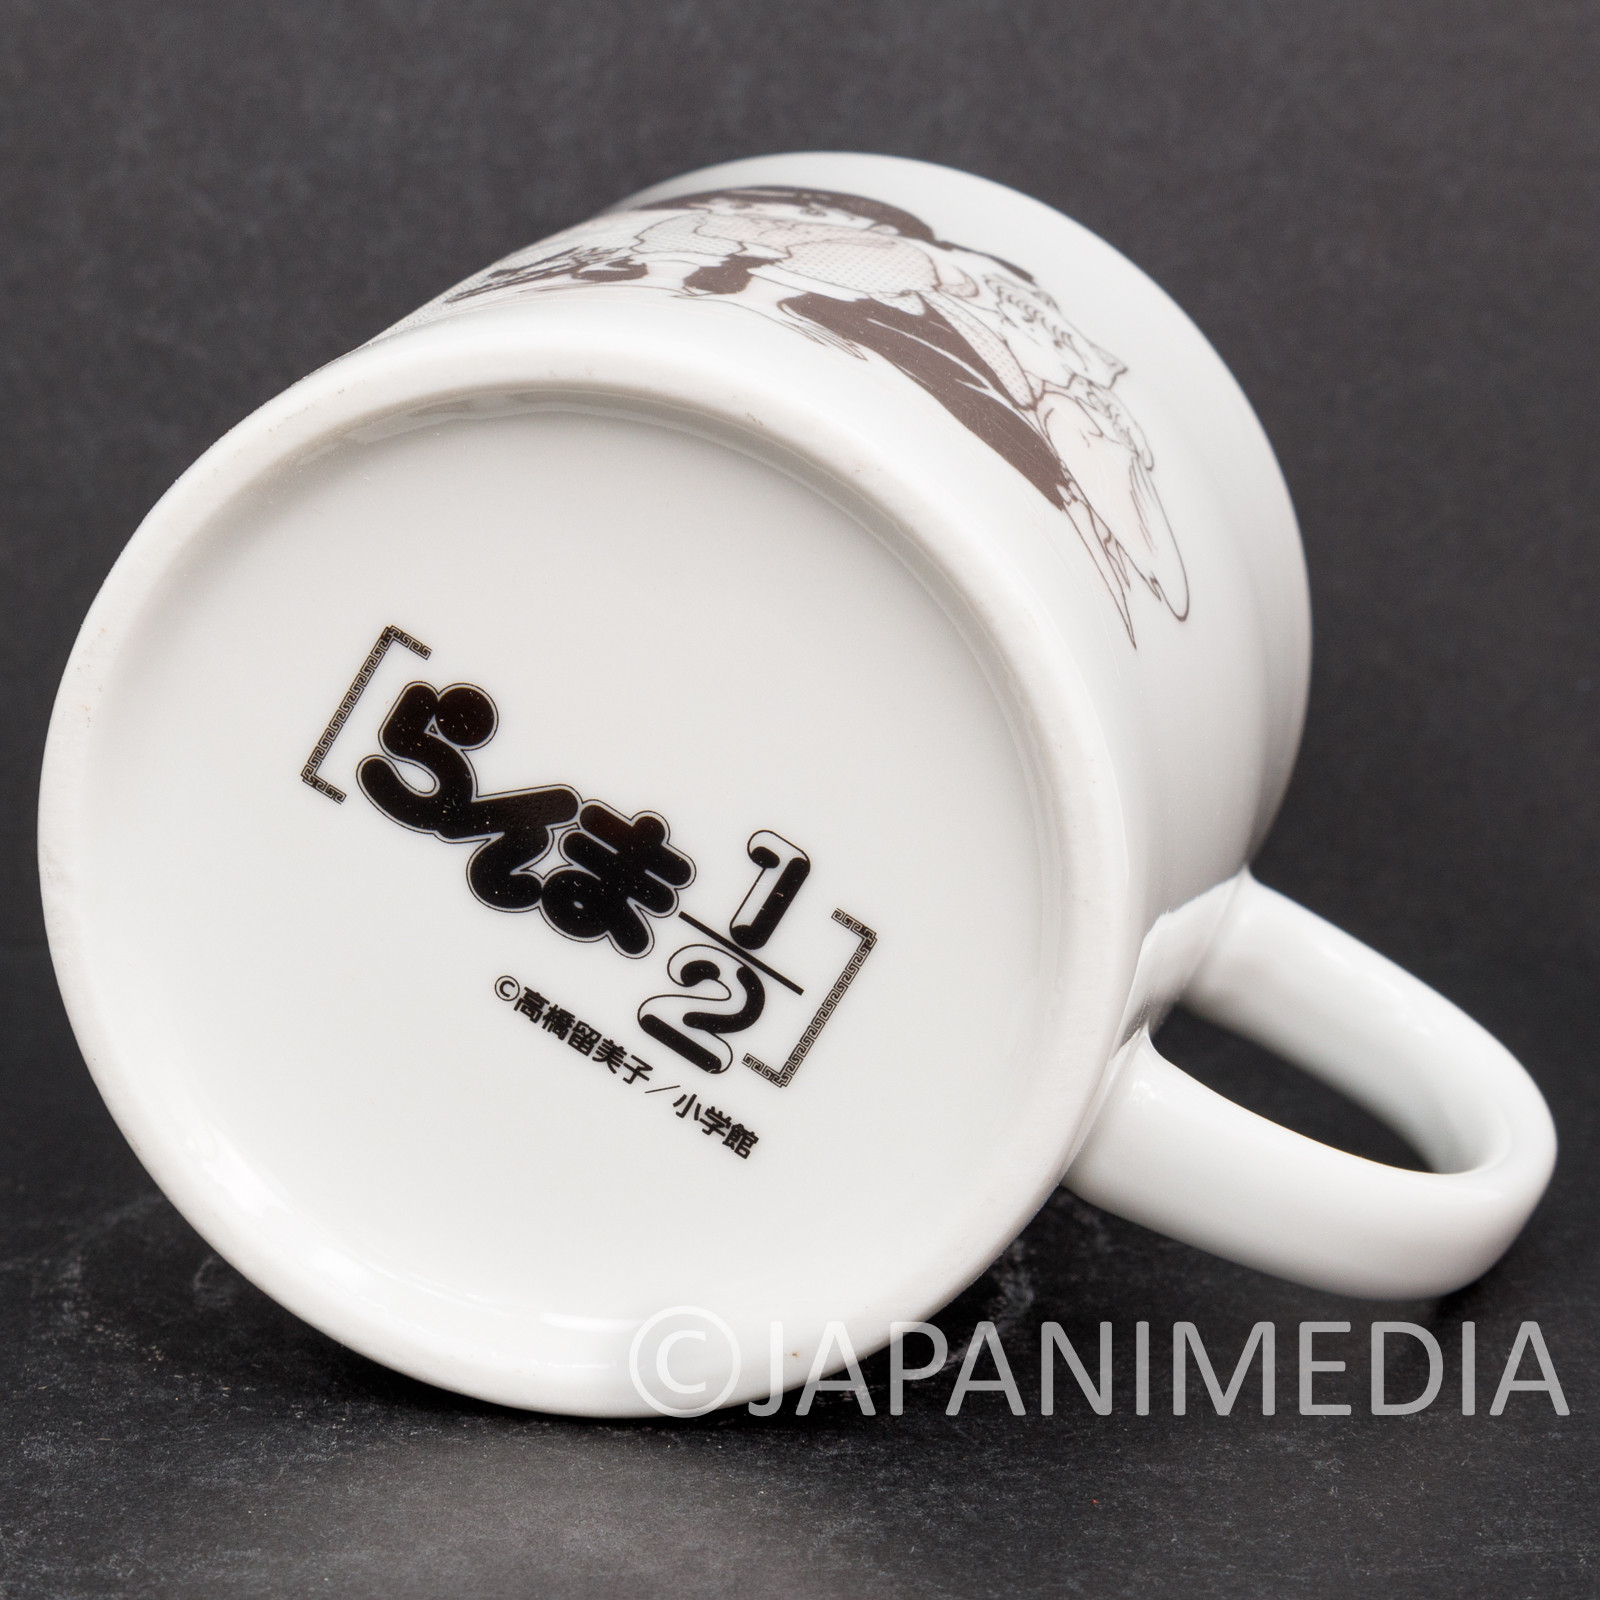 Ranma 1/2 Picture Change Mug JAPAN ANIME JAPANIMEDIA